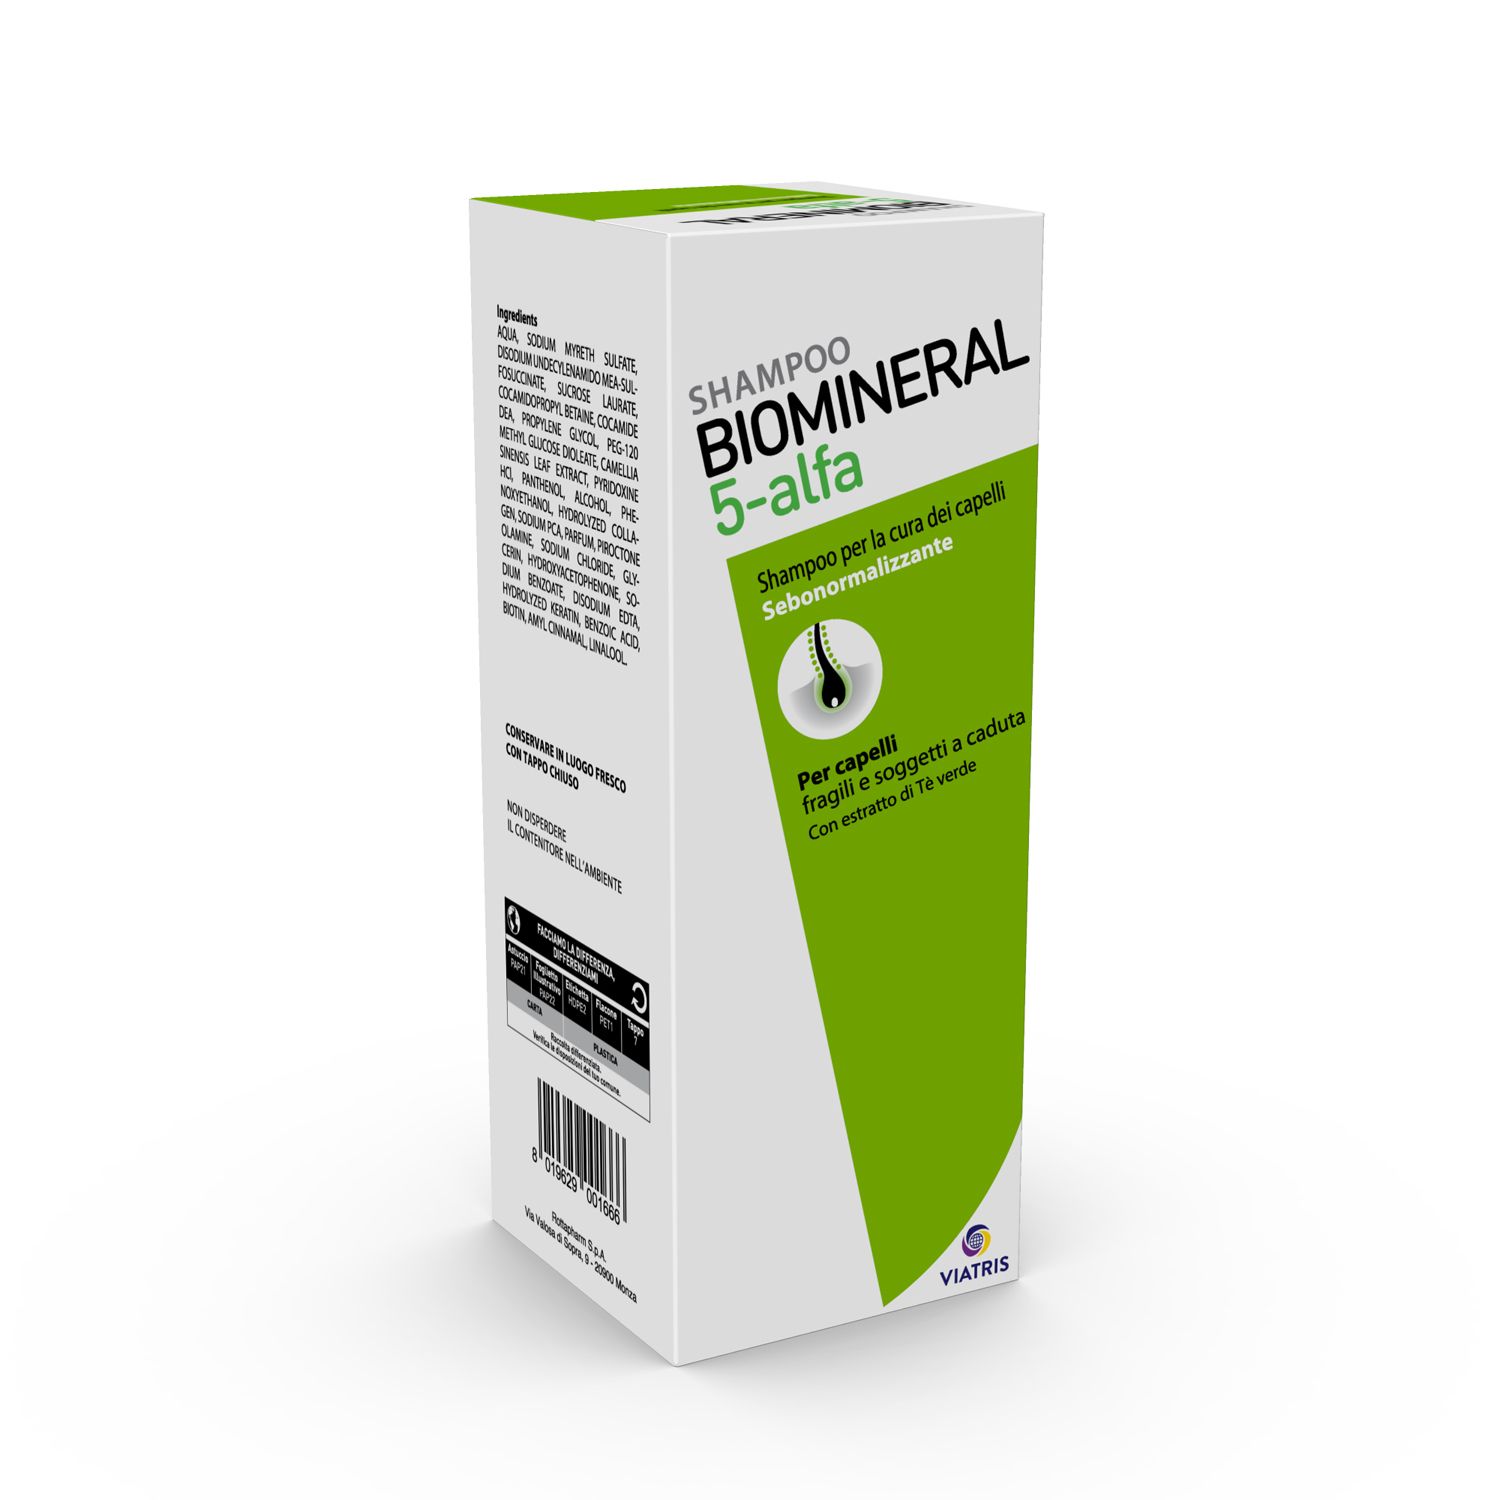 Image of BIOMINERAL 5-alfa Shampoo